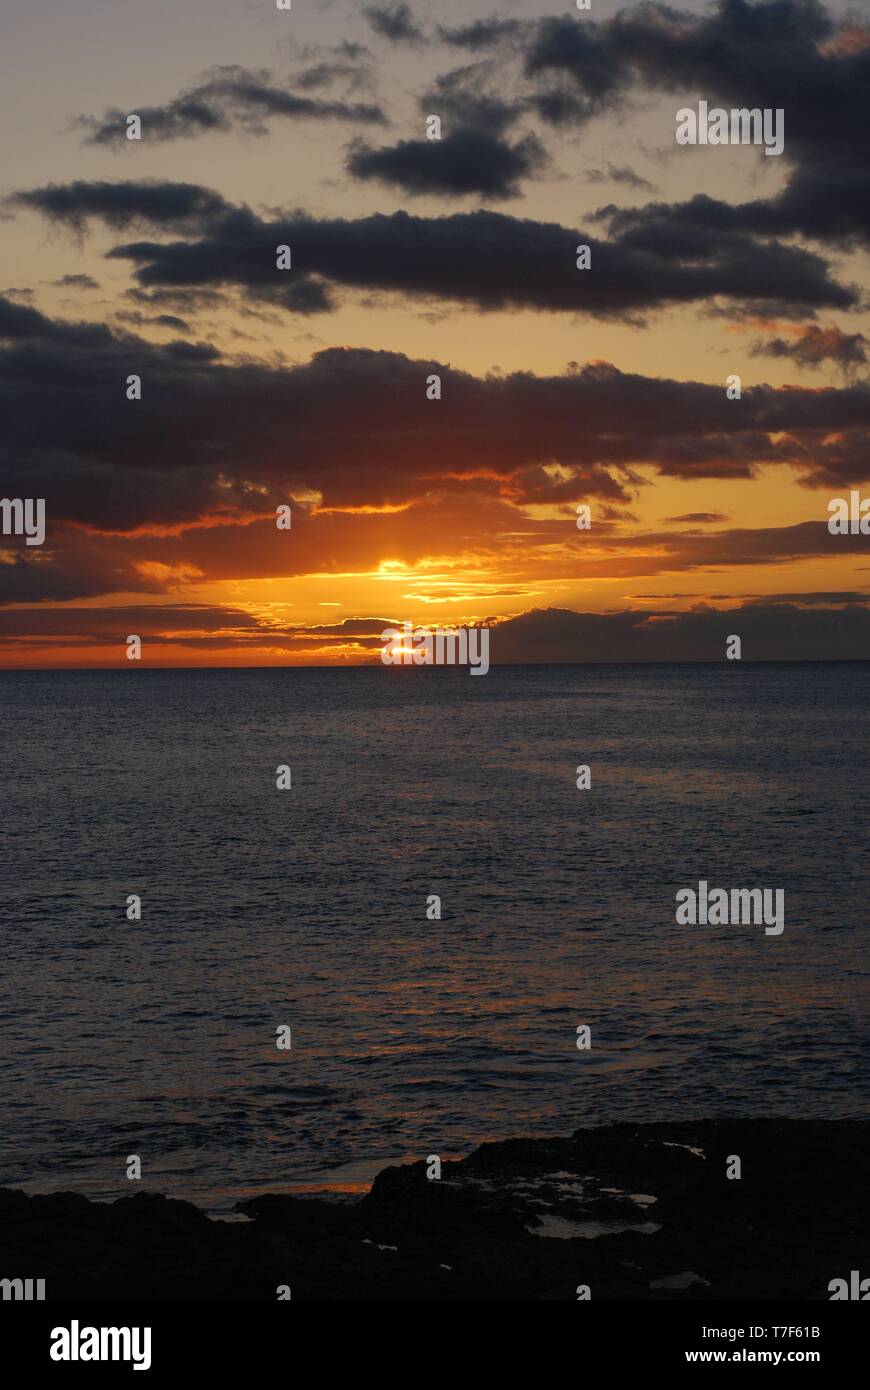 Sun setting over the ocean in Oahu Hawaii, Hawaiian island sunset orange glowing sky with clouds portrait orientation Stock Photo